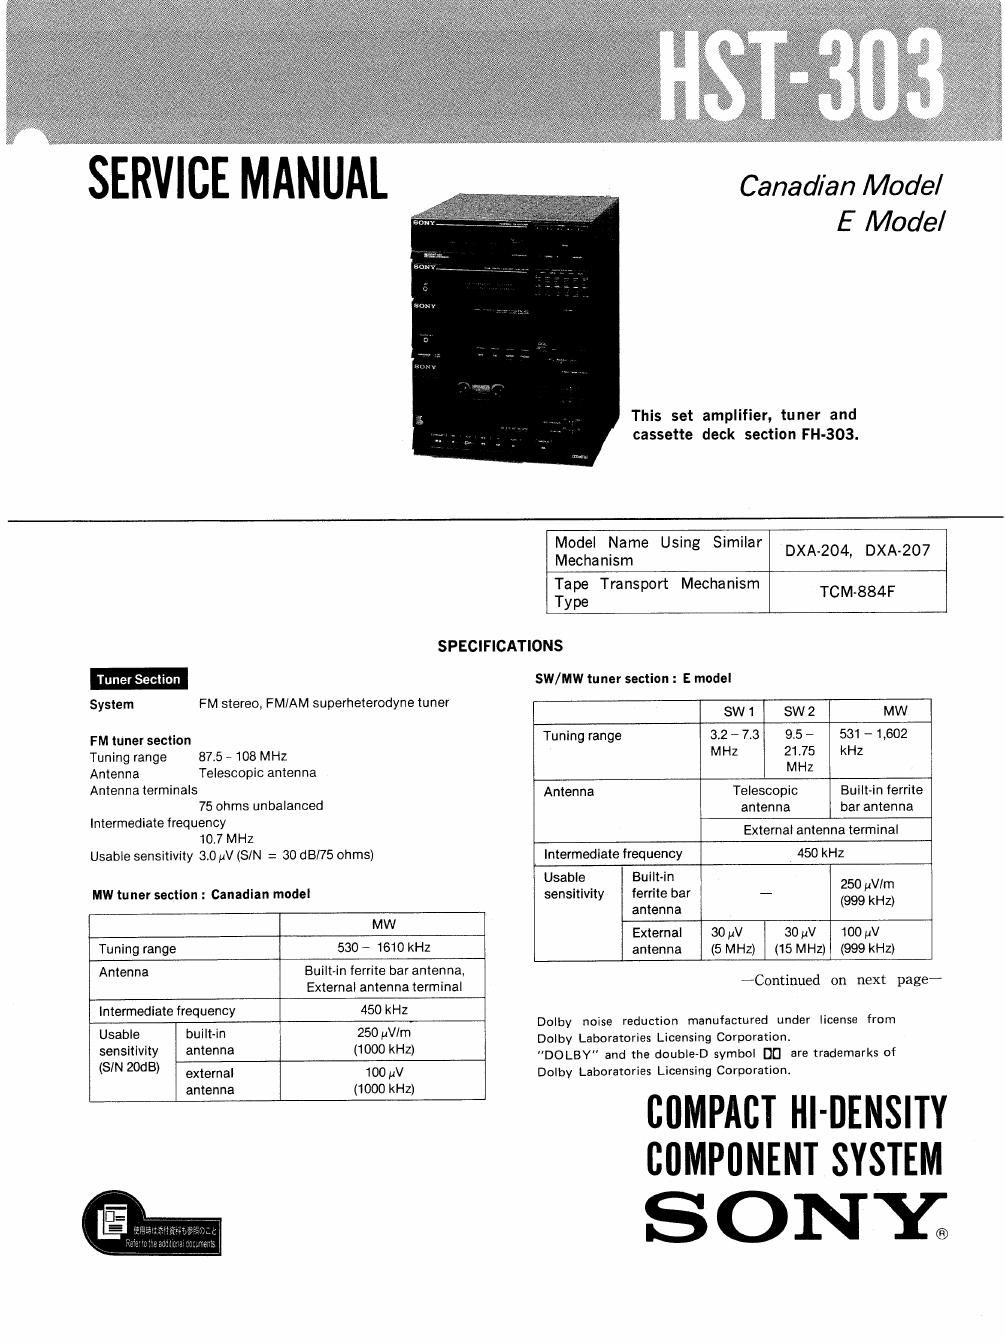 sony hst 303 service manual